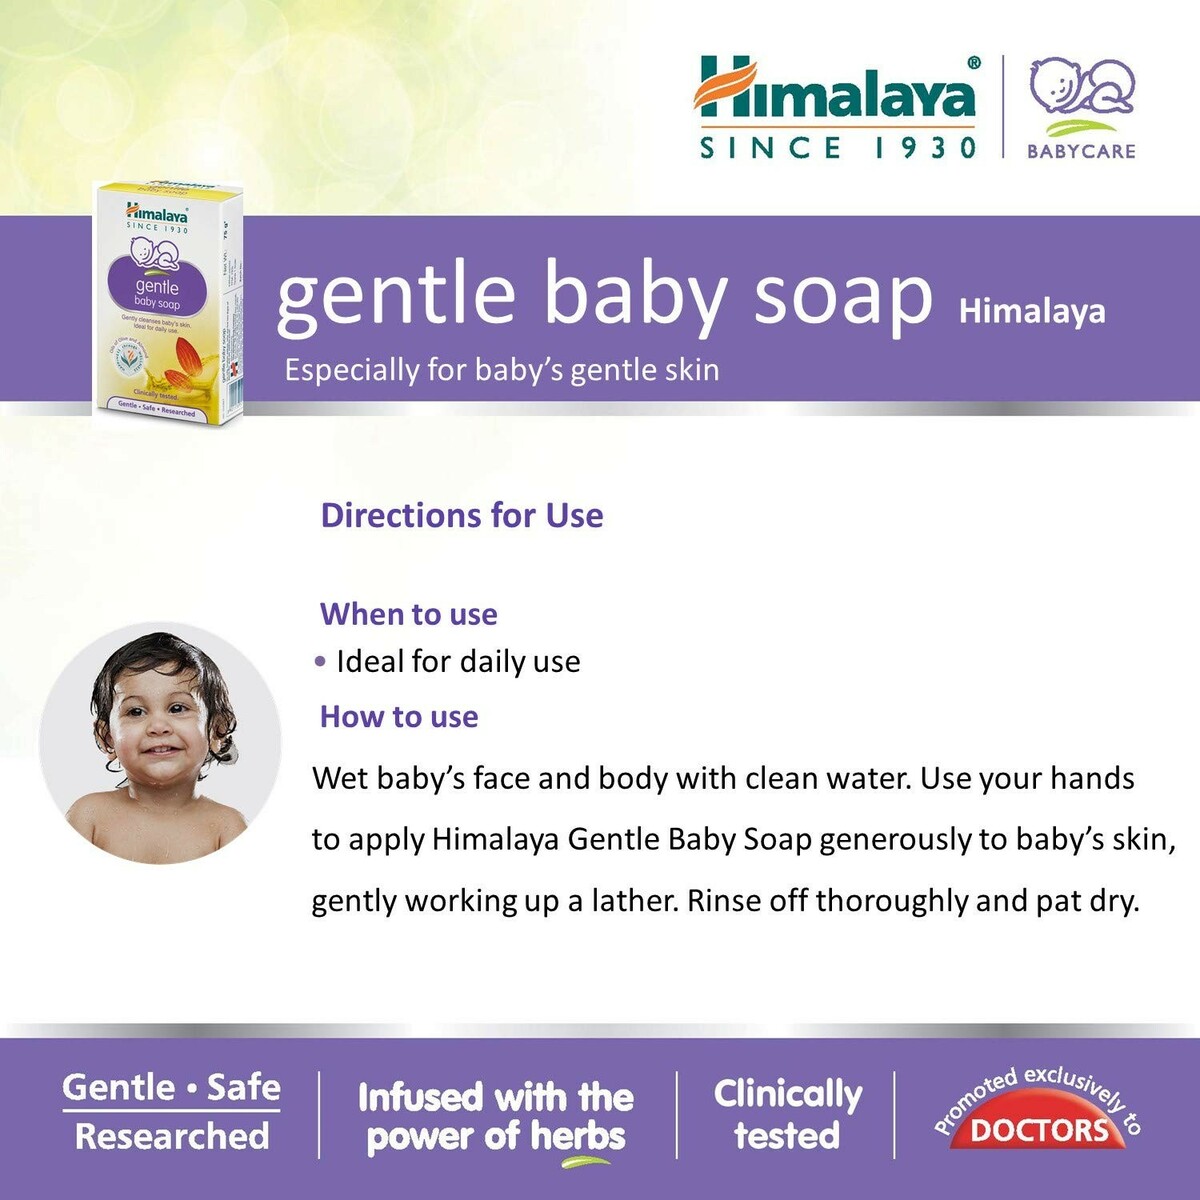 Himalaya Baby Soap 75g 3s+Free